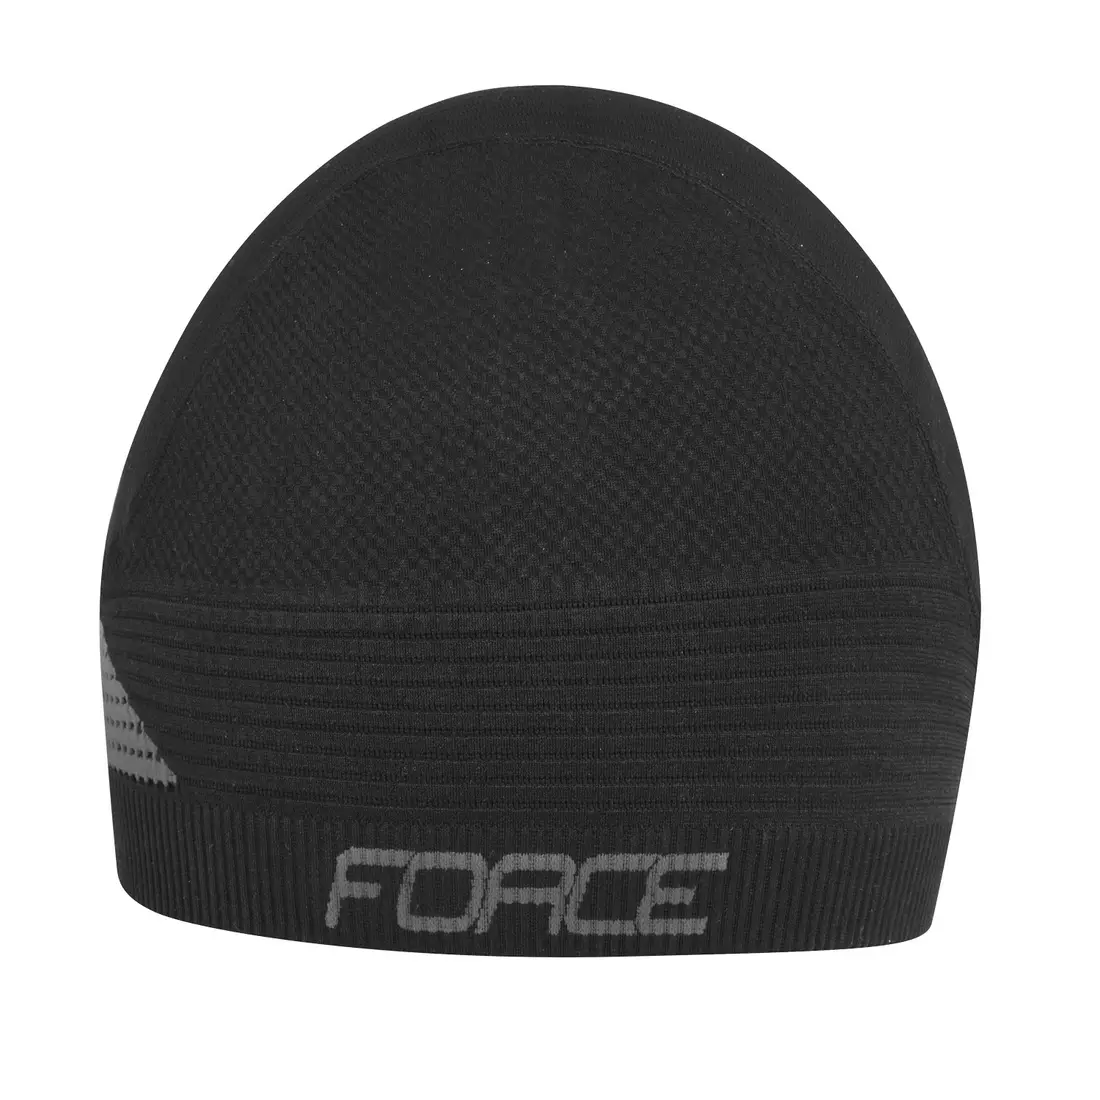 FORCE helmet cap UNI, black 90313